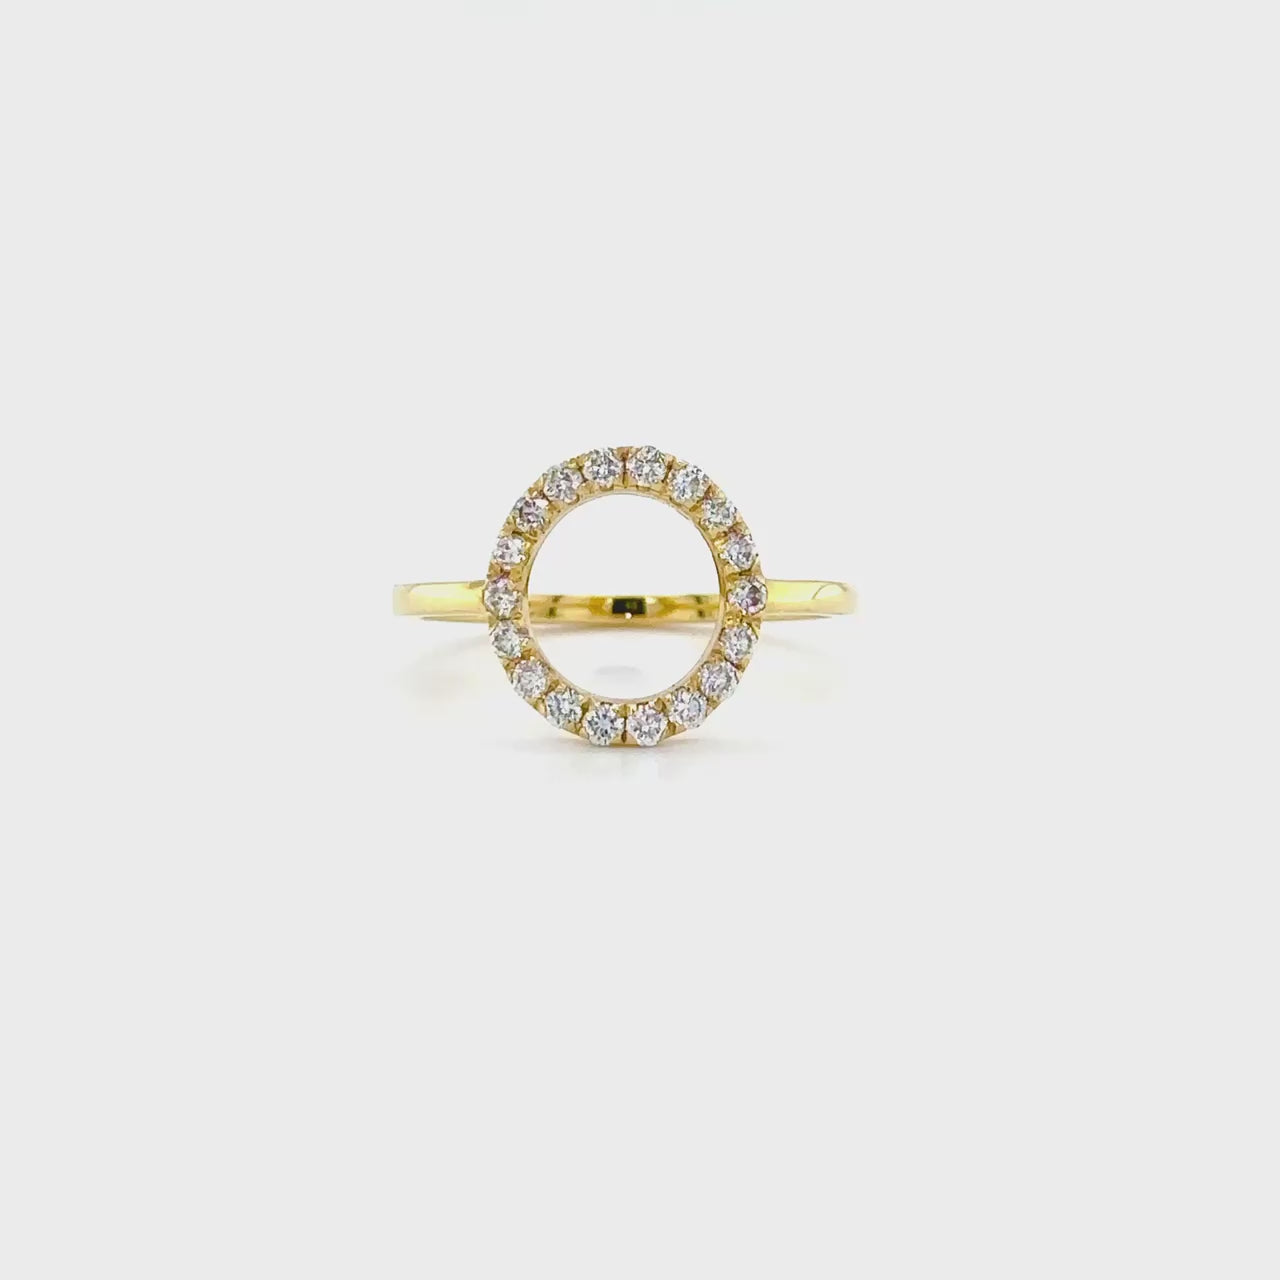 Round Brilliant, Circle of Life, Diamond Ring, Jewelry, Precious Stones, Elegant Design, Symbolic Jewelry, Meaningful Gift, Special Occasion, Fine Craftsmanship